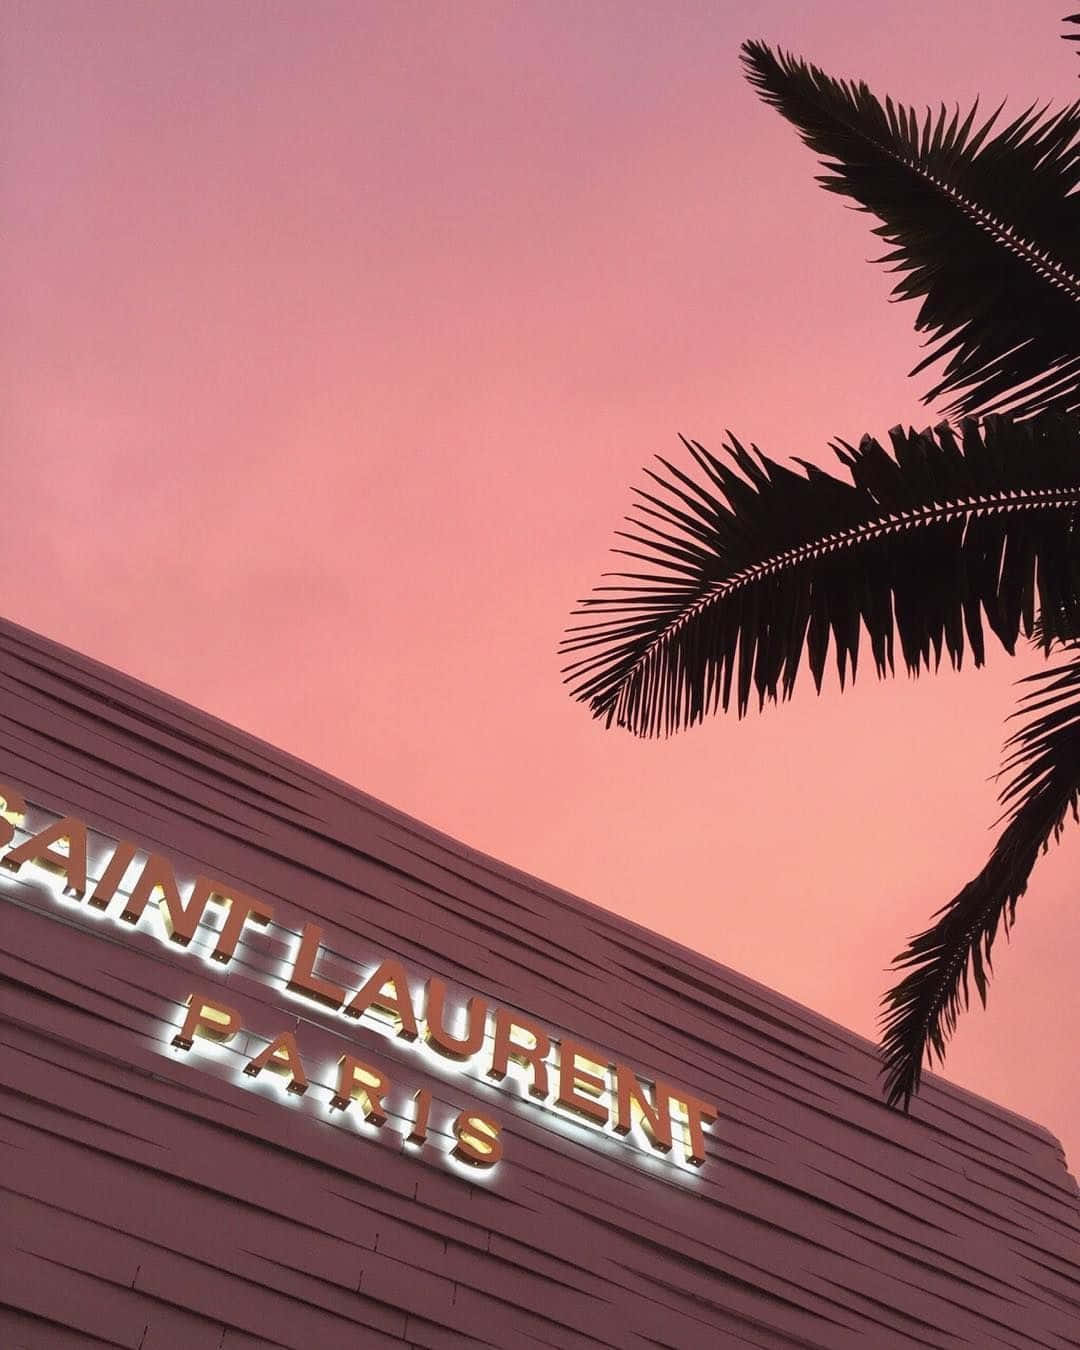 Saint Laurent Paris - A Pink Sky And Palm Trees Background